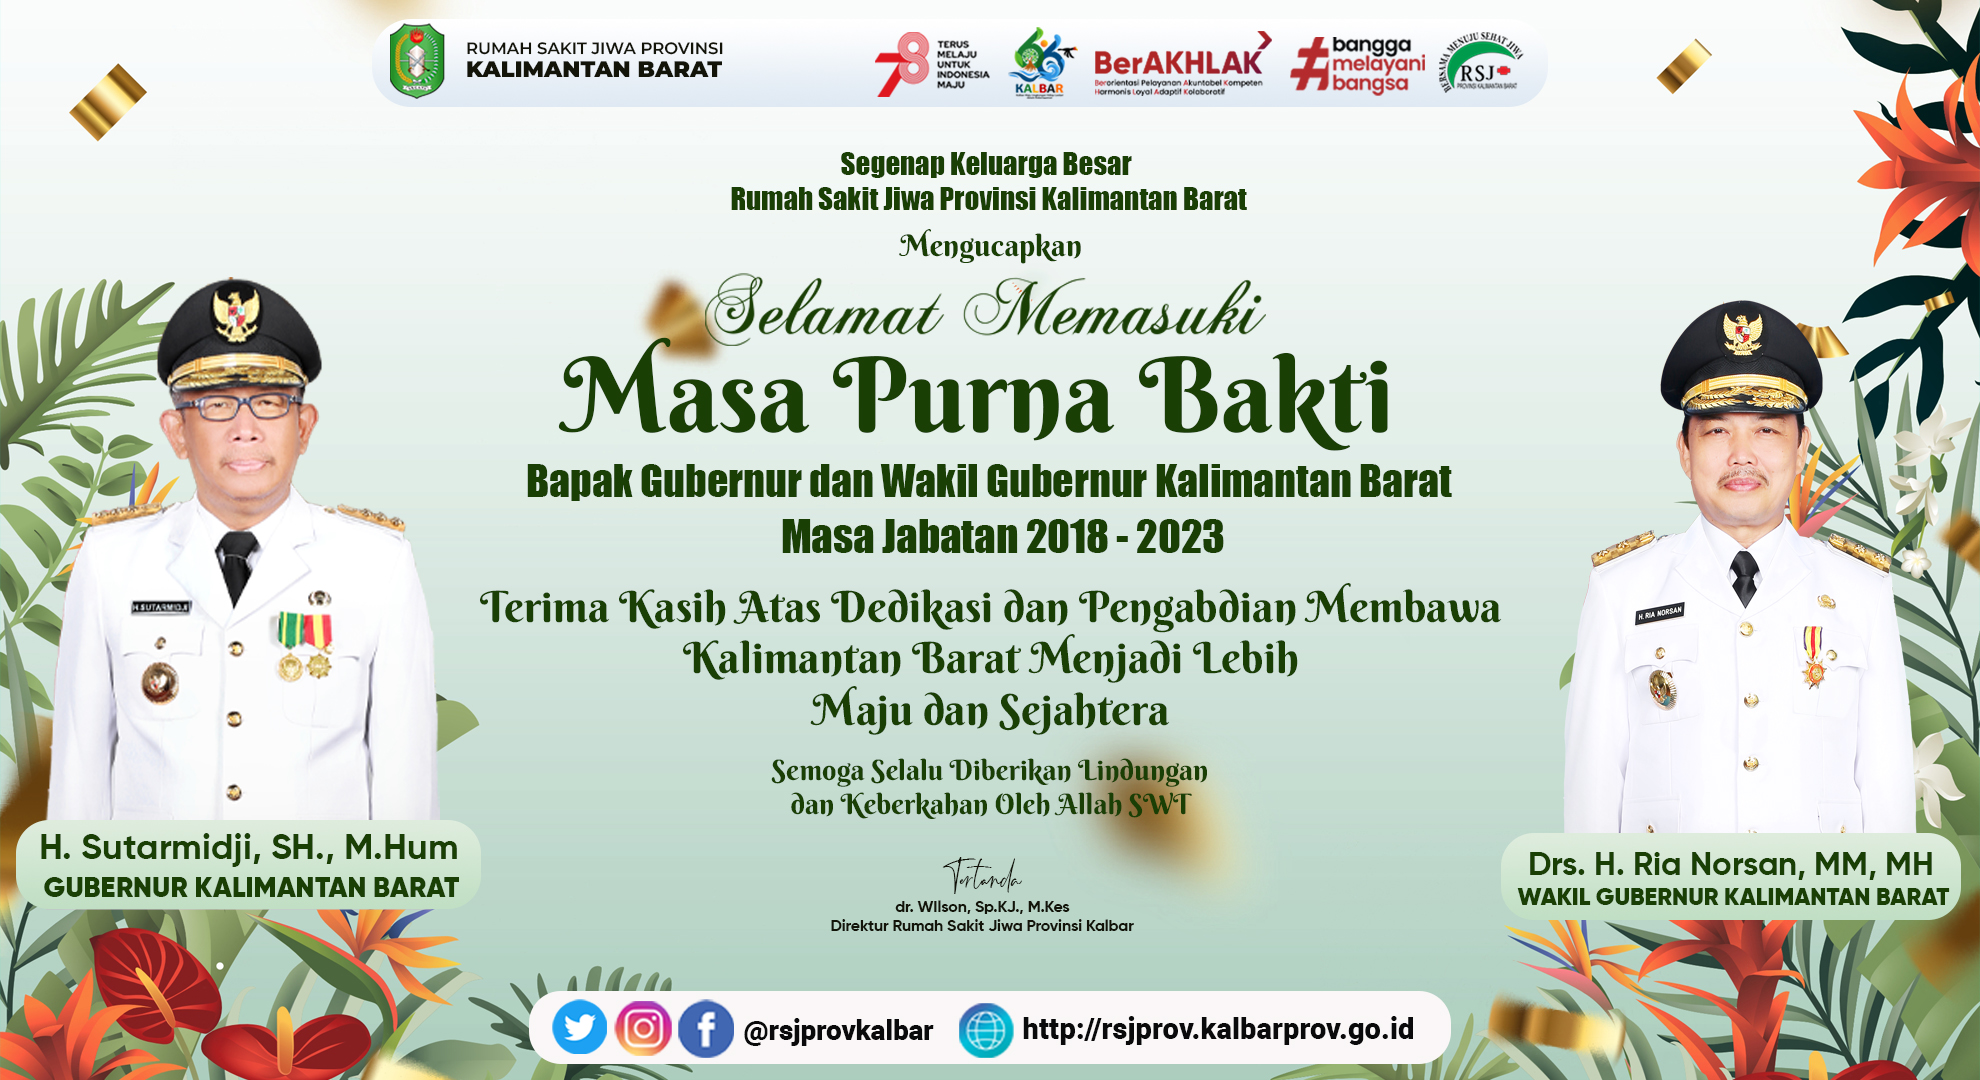 Selamat Memasuki Masa Purna Bakti Bapak Gubernur dan Wakil Gubernur Kalimantan Barat Masa Jabatan 2018 - 2023